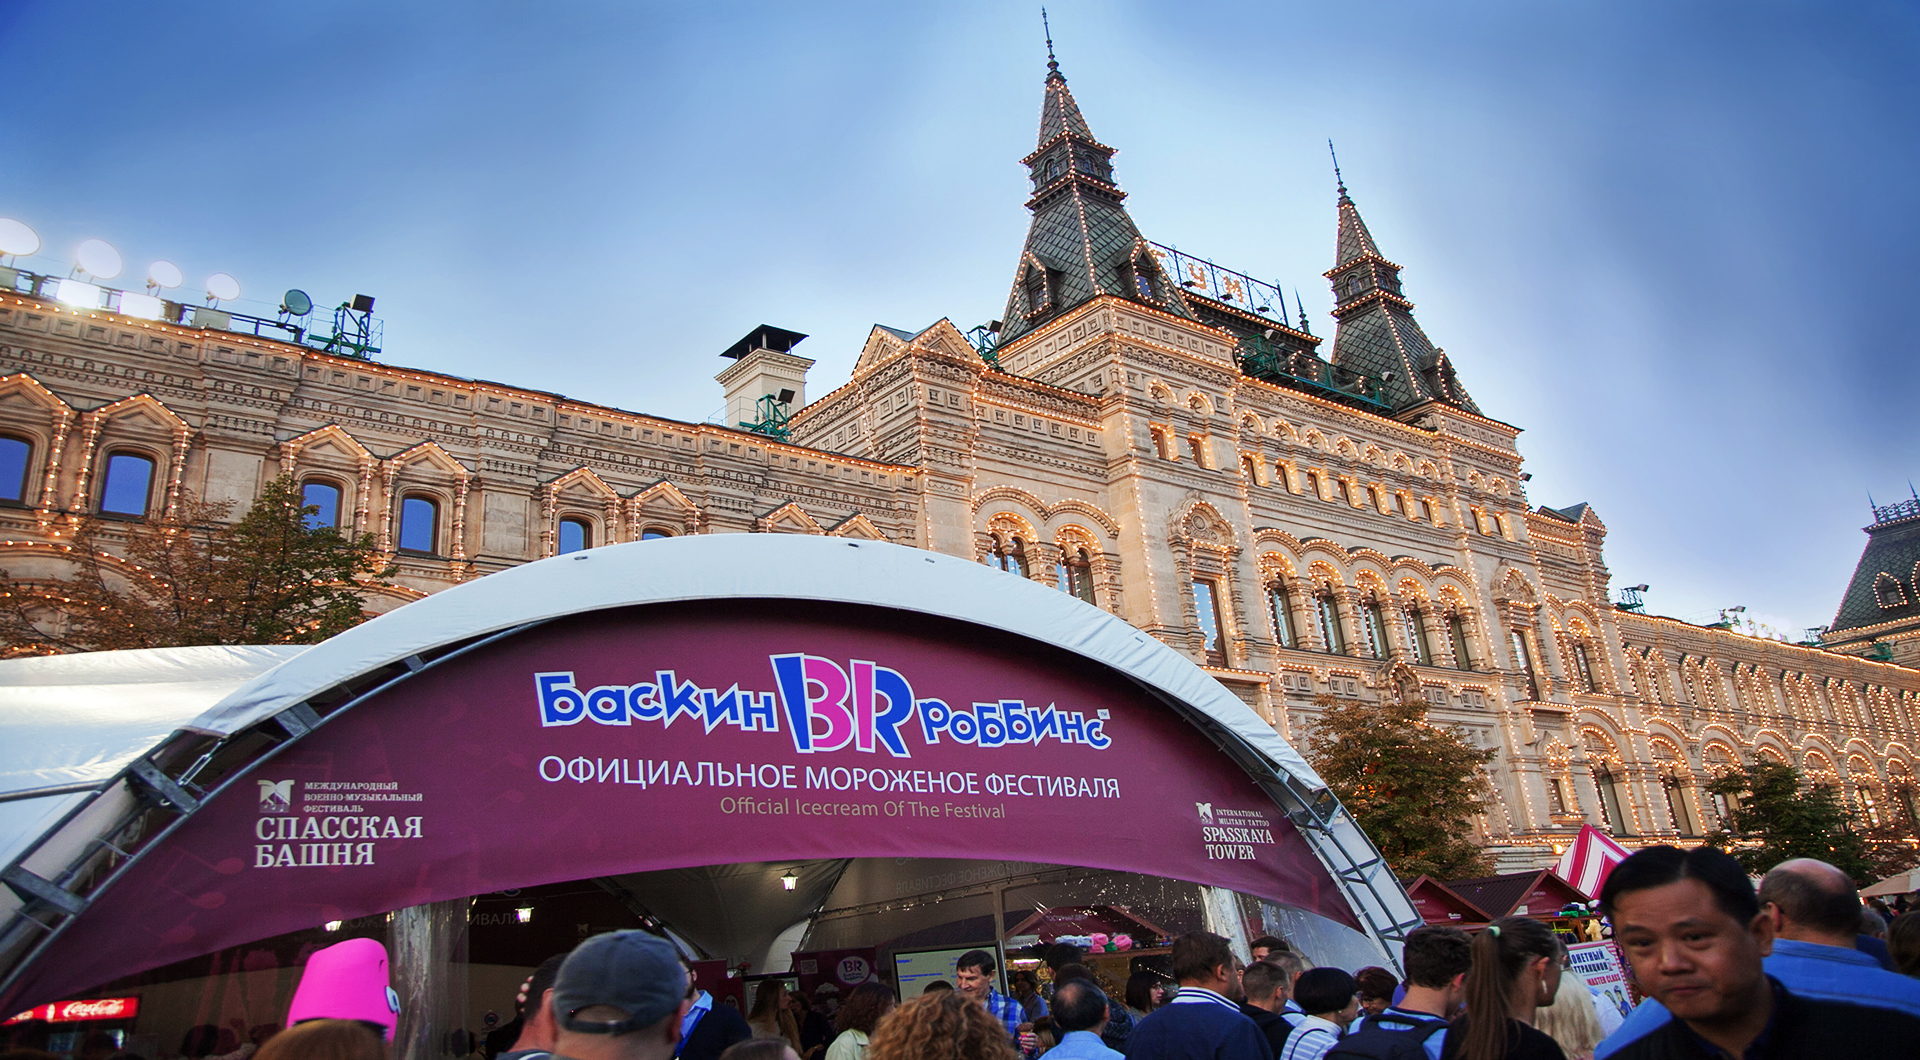 «Баскин Роббинс» - Официальное мороженое Международного фестиваля «Спасская башня» 2021